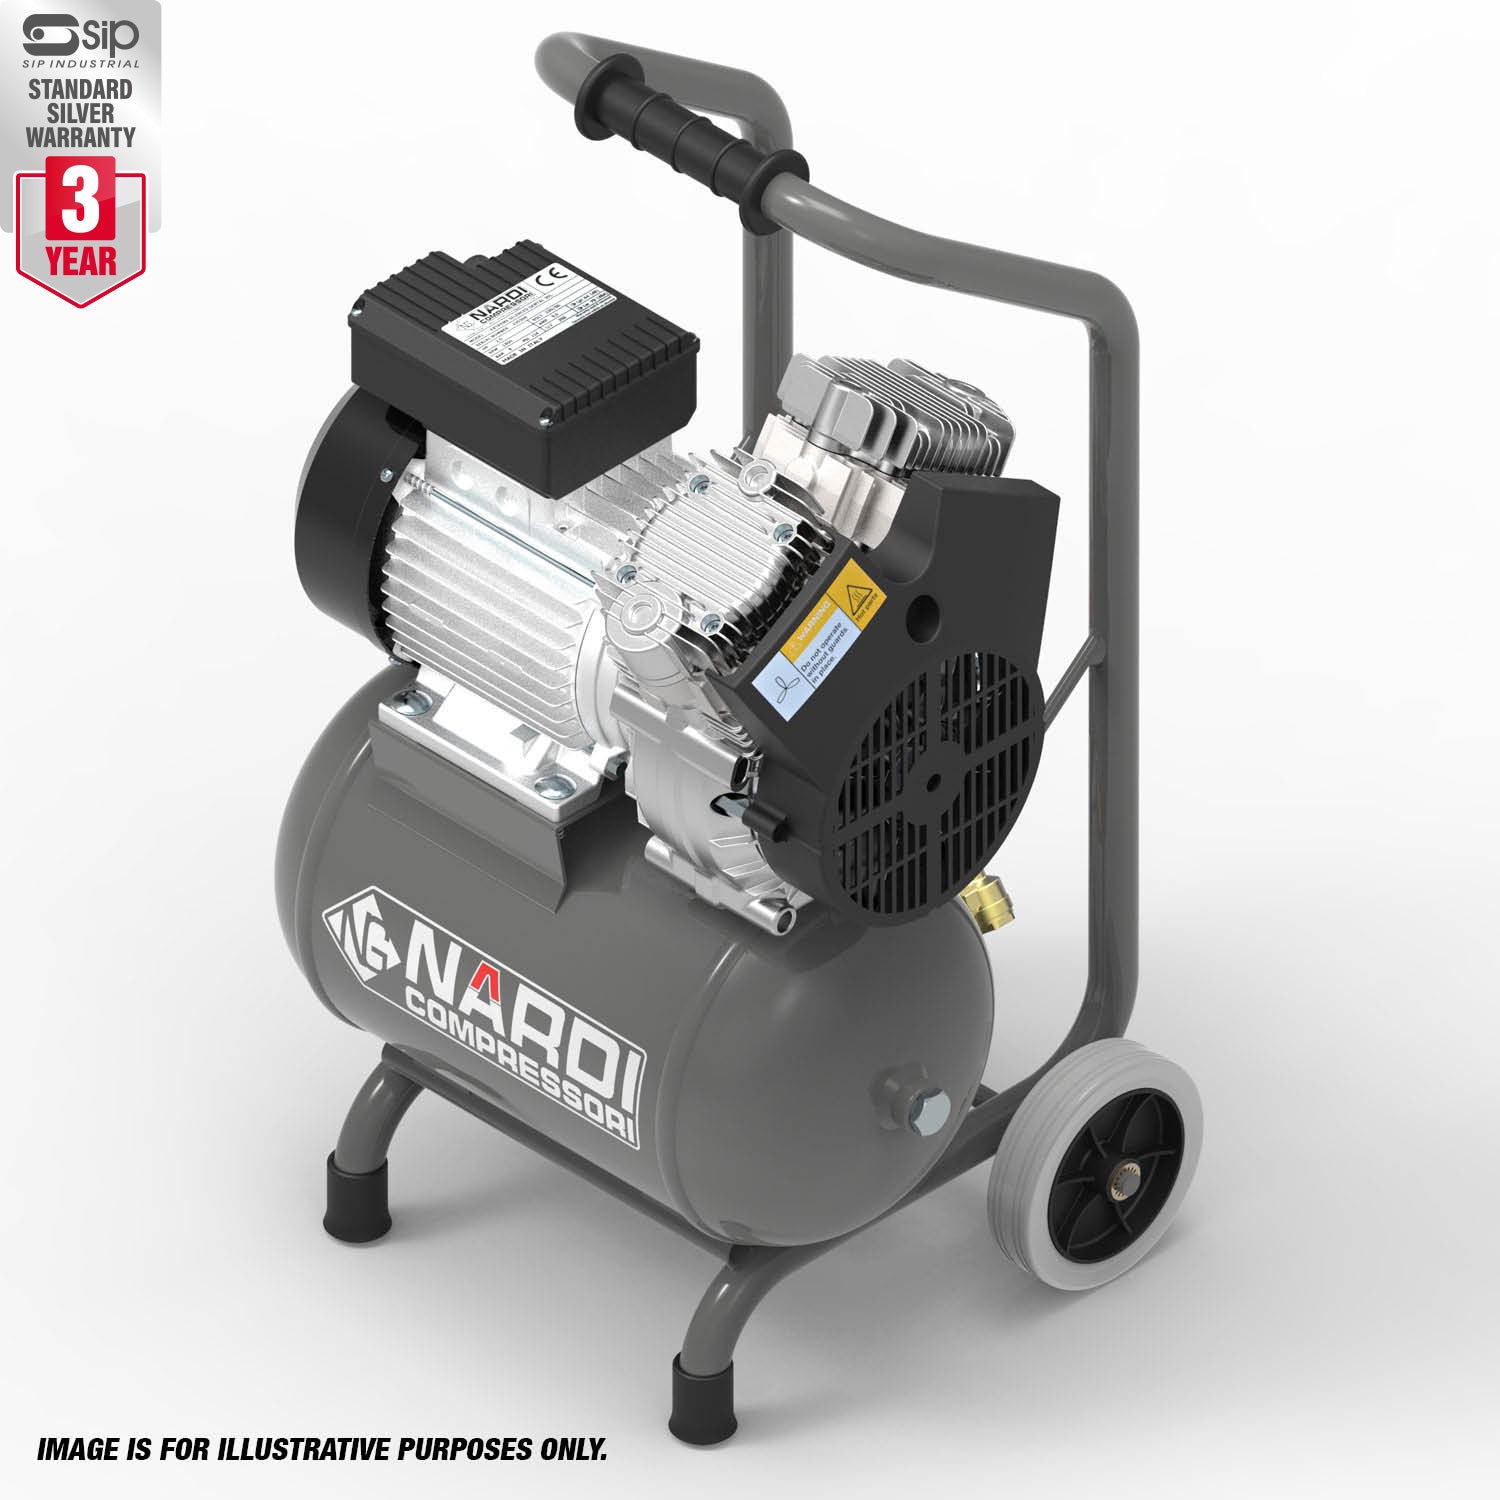 NARDI EXTREME 1 2.00HP 2-POLE 25ltr Compressor